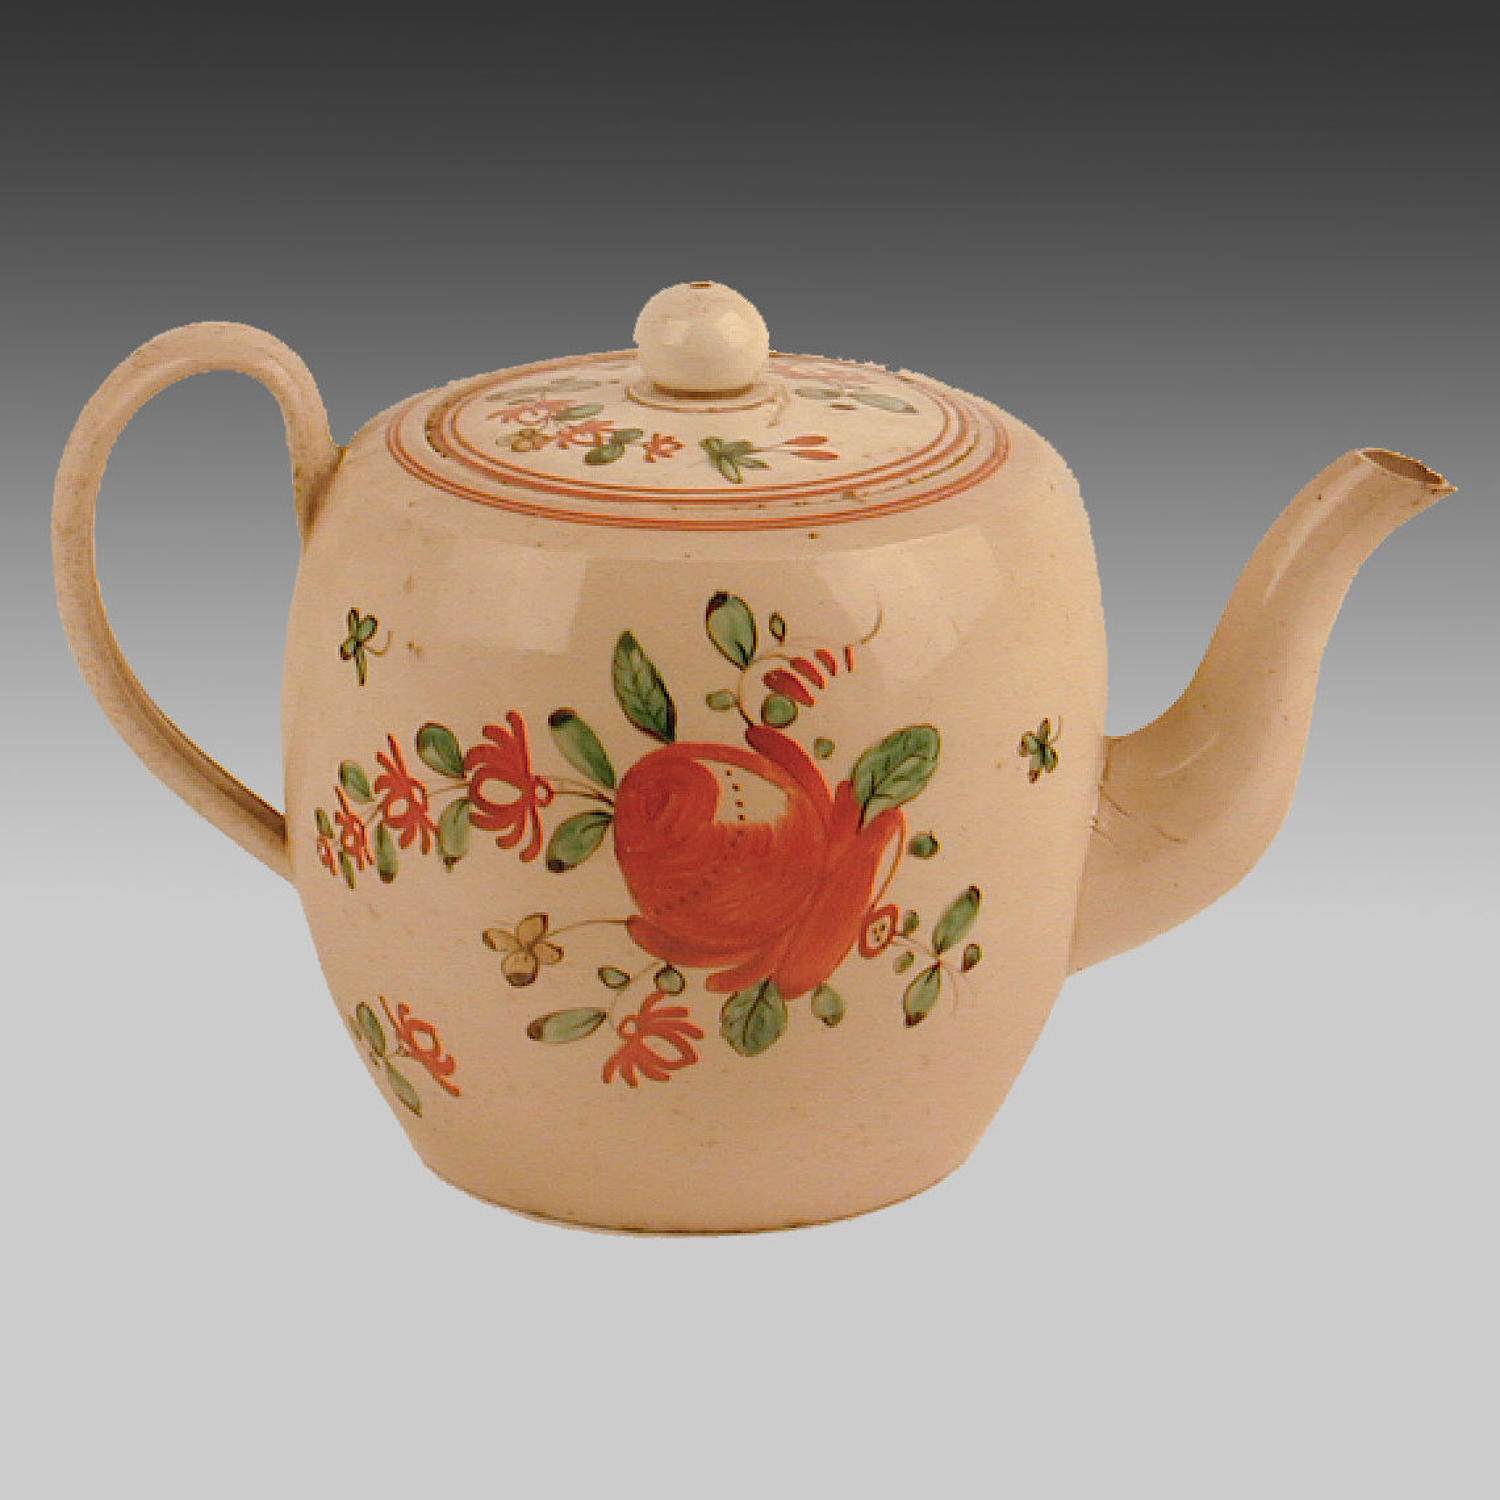 18th century creamware teapot